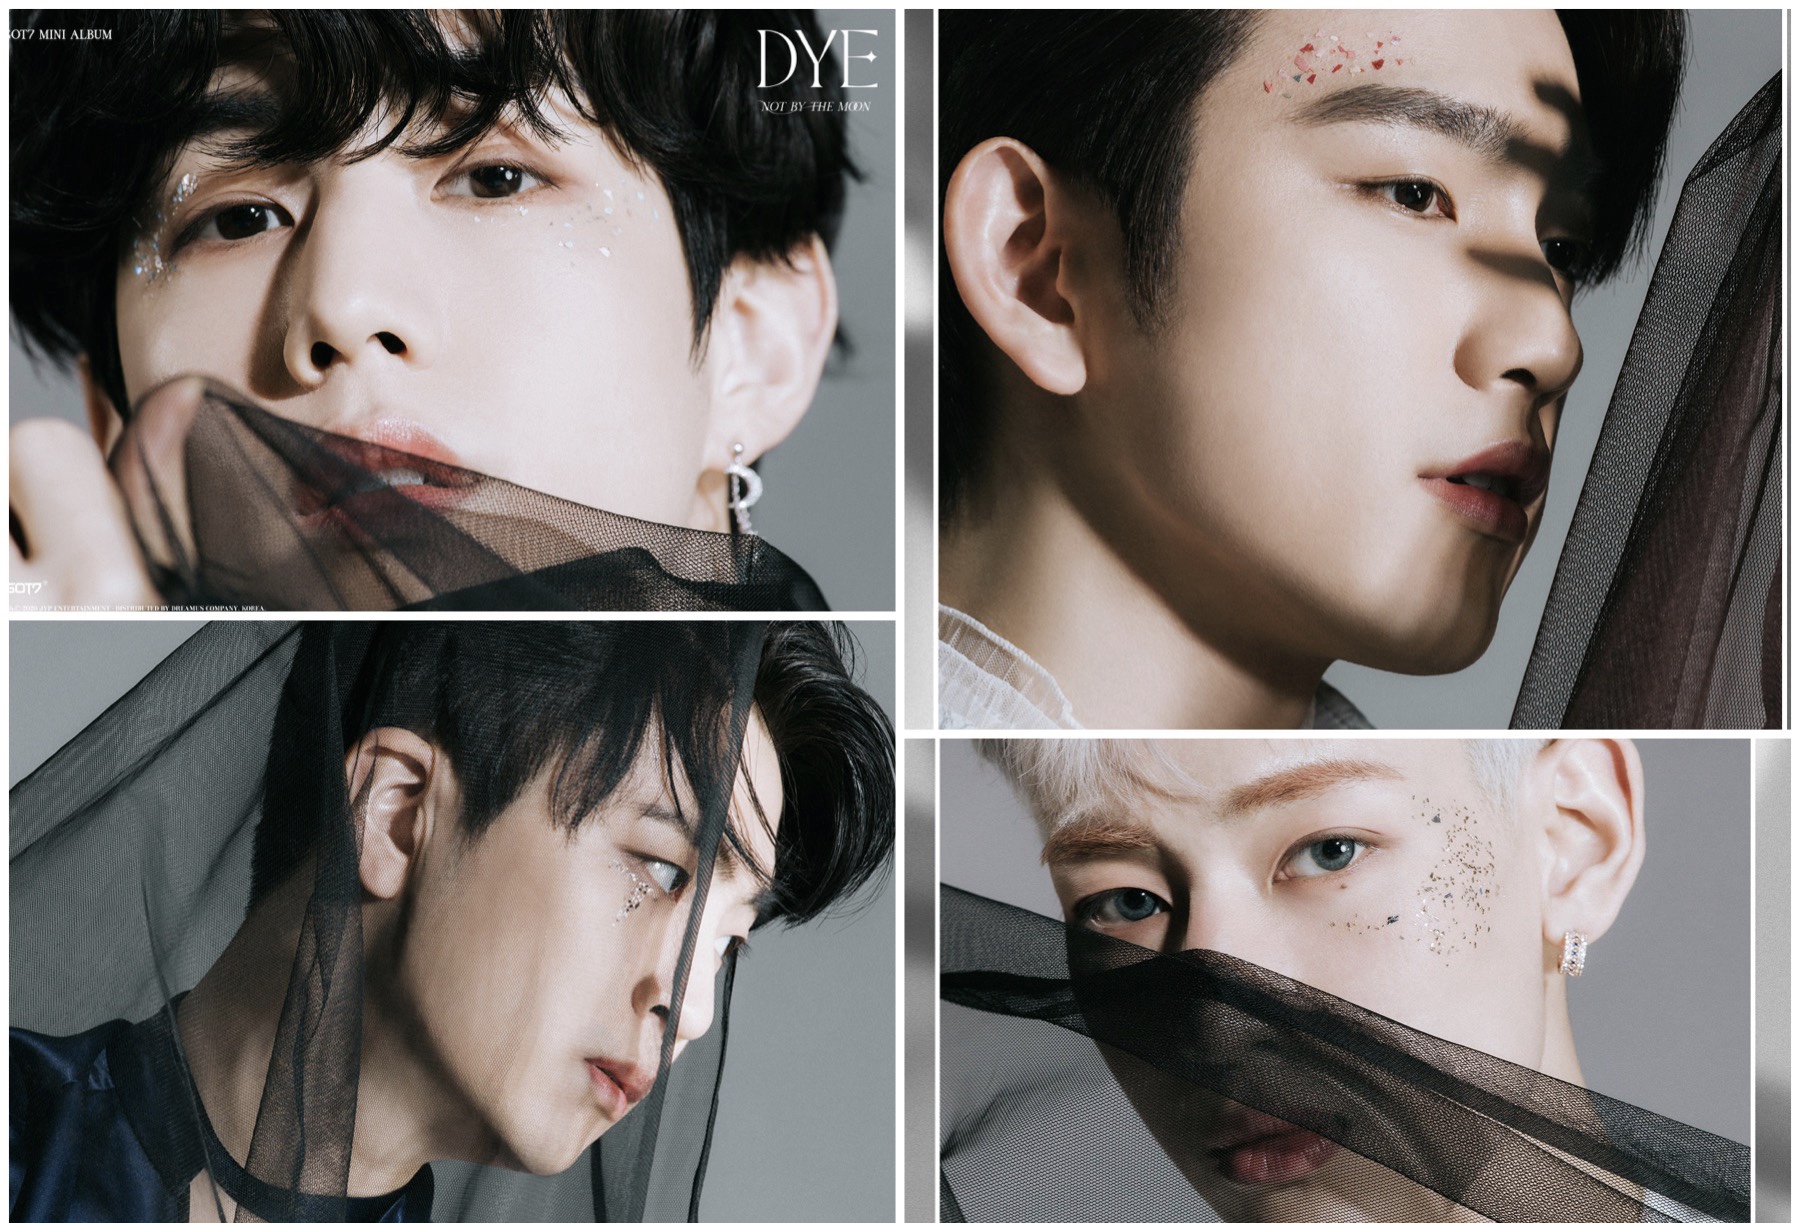 GOT7's fourth teaser image release for DYE